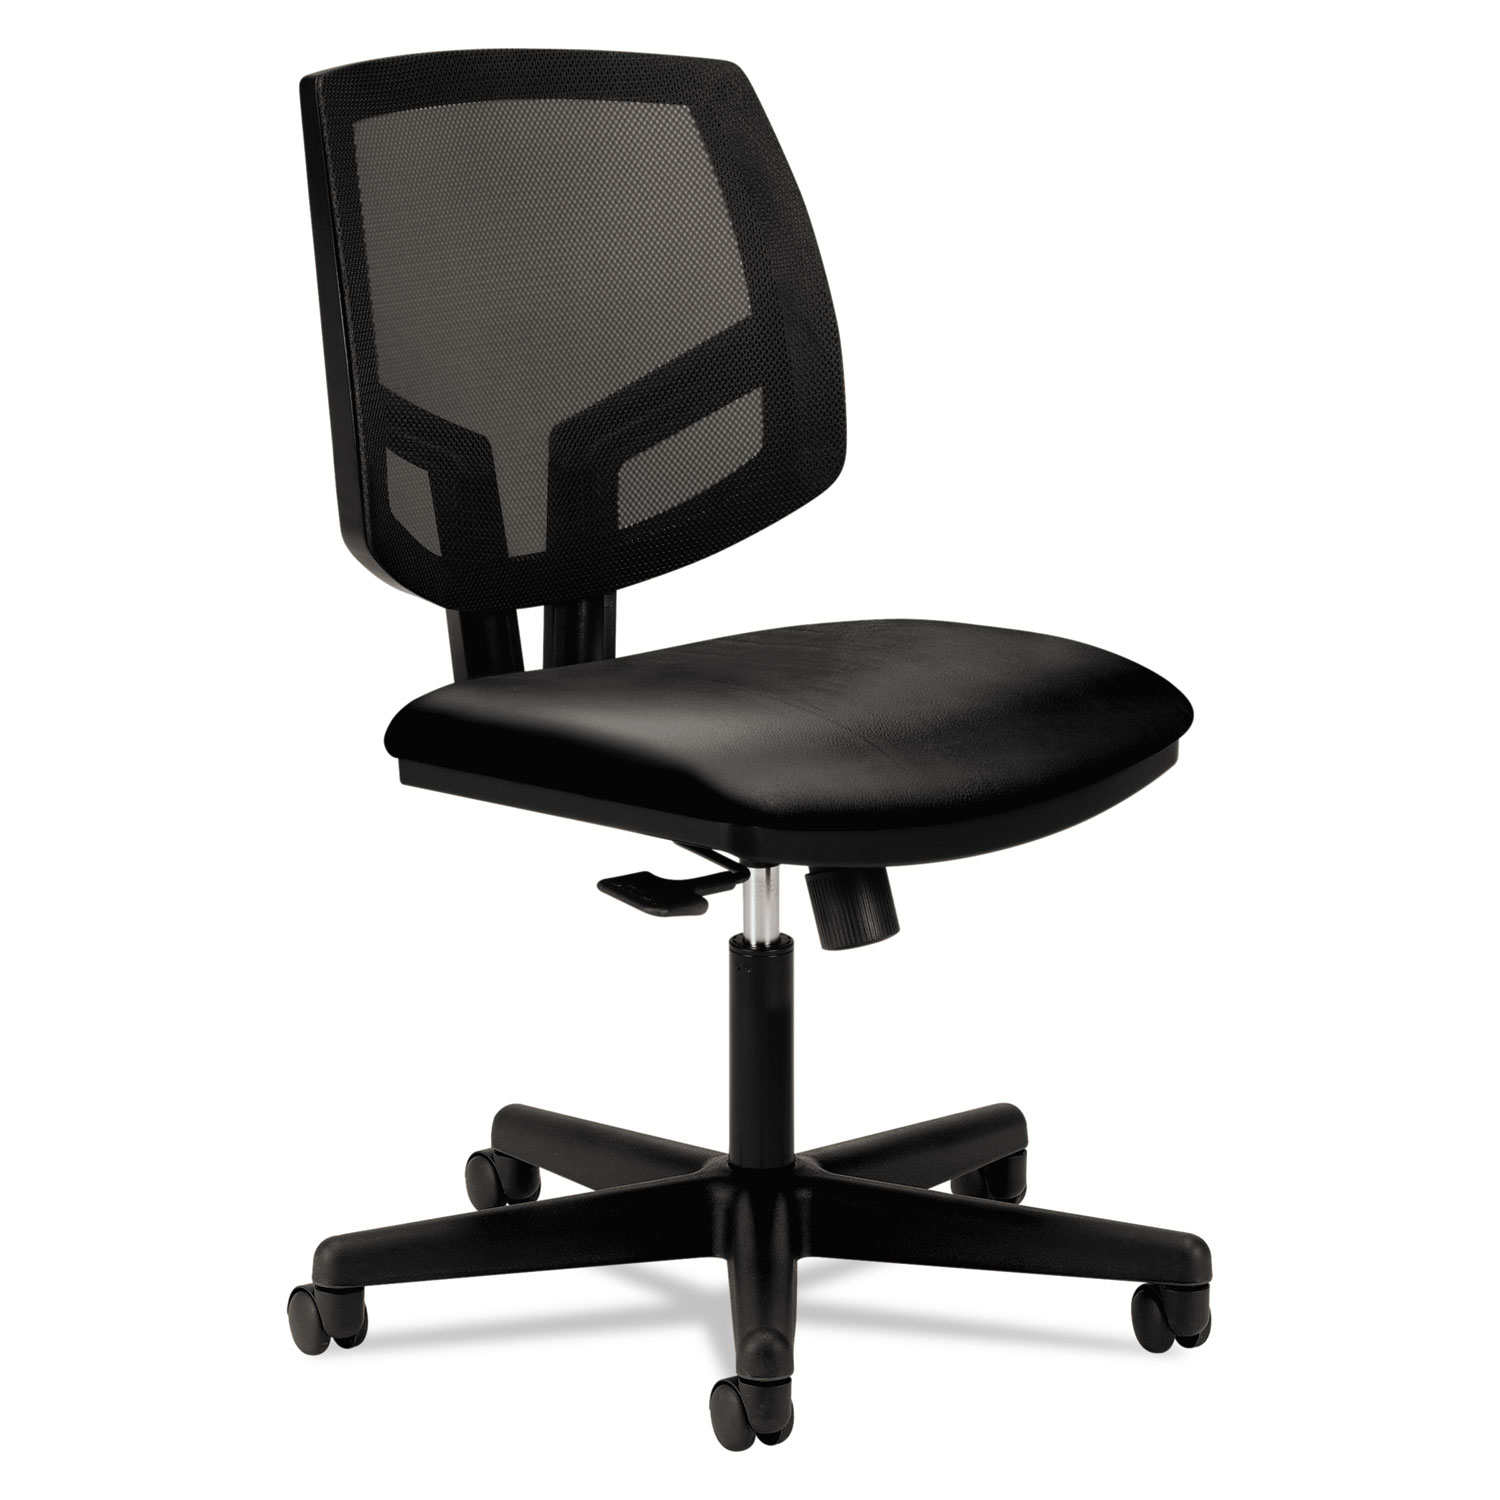  HON H5711.SB11.T Volt Series Mesh Back Leather Task Chair, Supports up to 250 lbs., Black Seat/Black Back, Black Base (HON5711SB11T) 